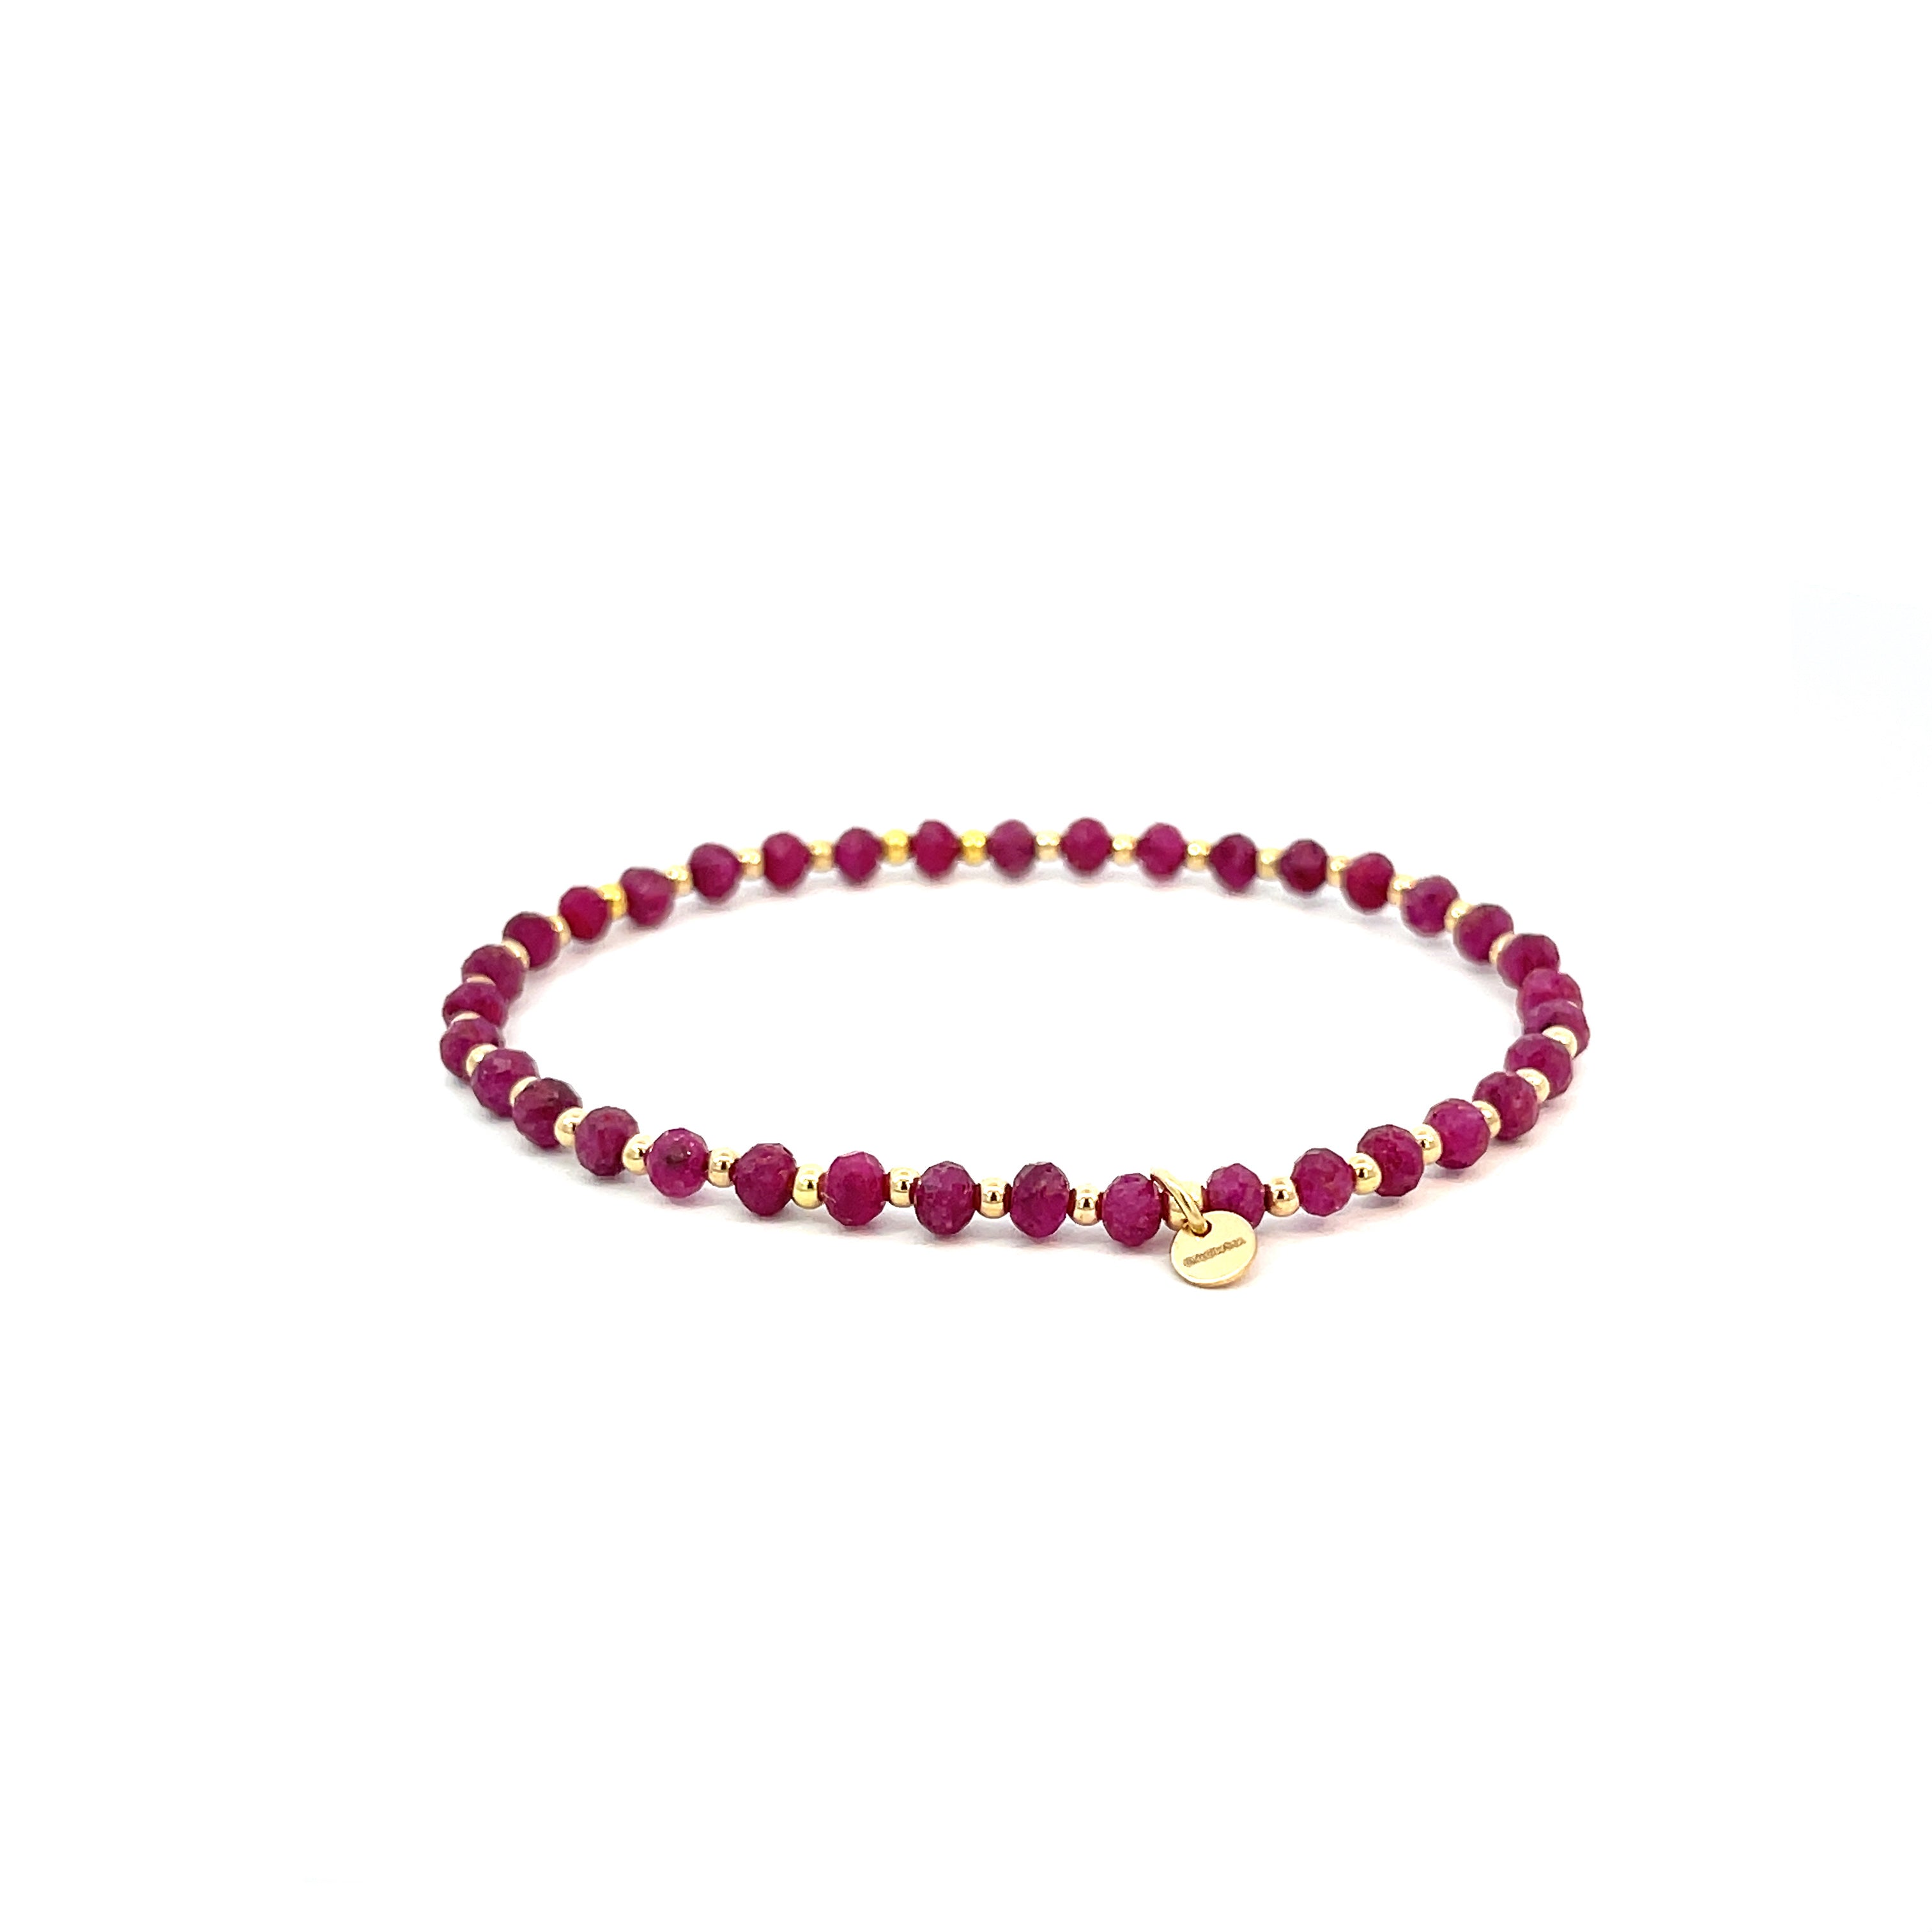 Shop the DANE 3MM Sri Lankan Ruby Bracelet Now